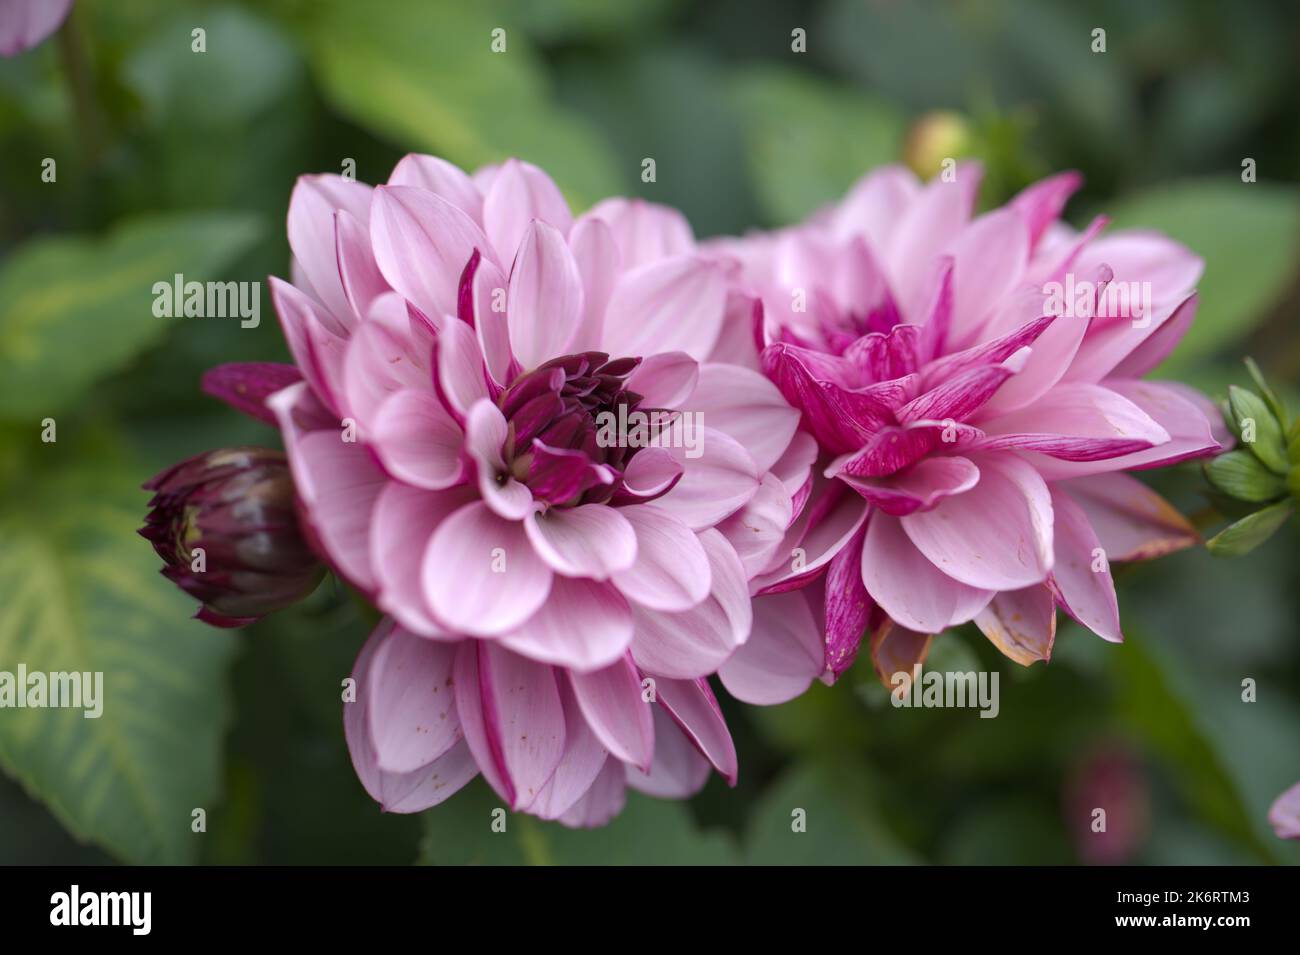 Dahlia flowers in a garden Stock Photo